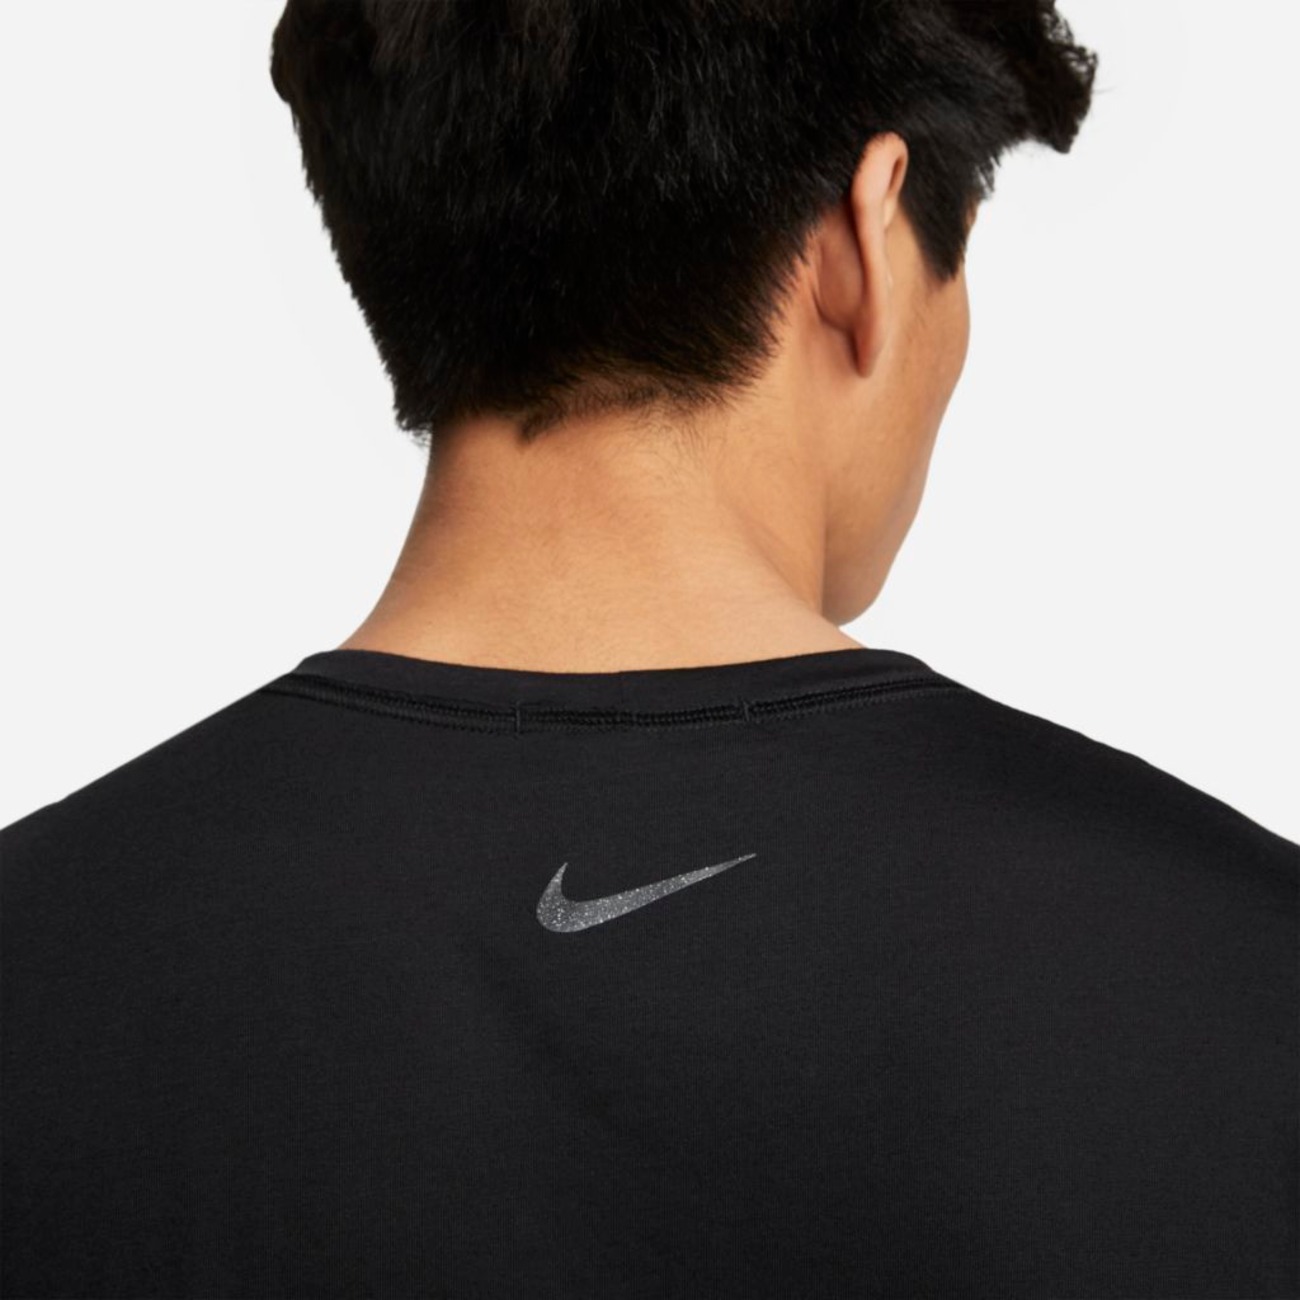 Camiseta Nike Yoga Dri-FIT Masculina